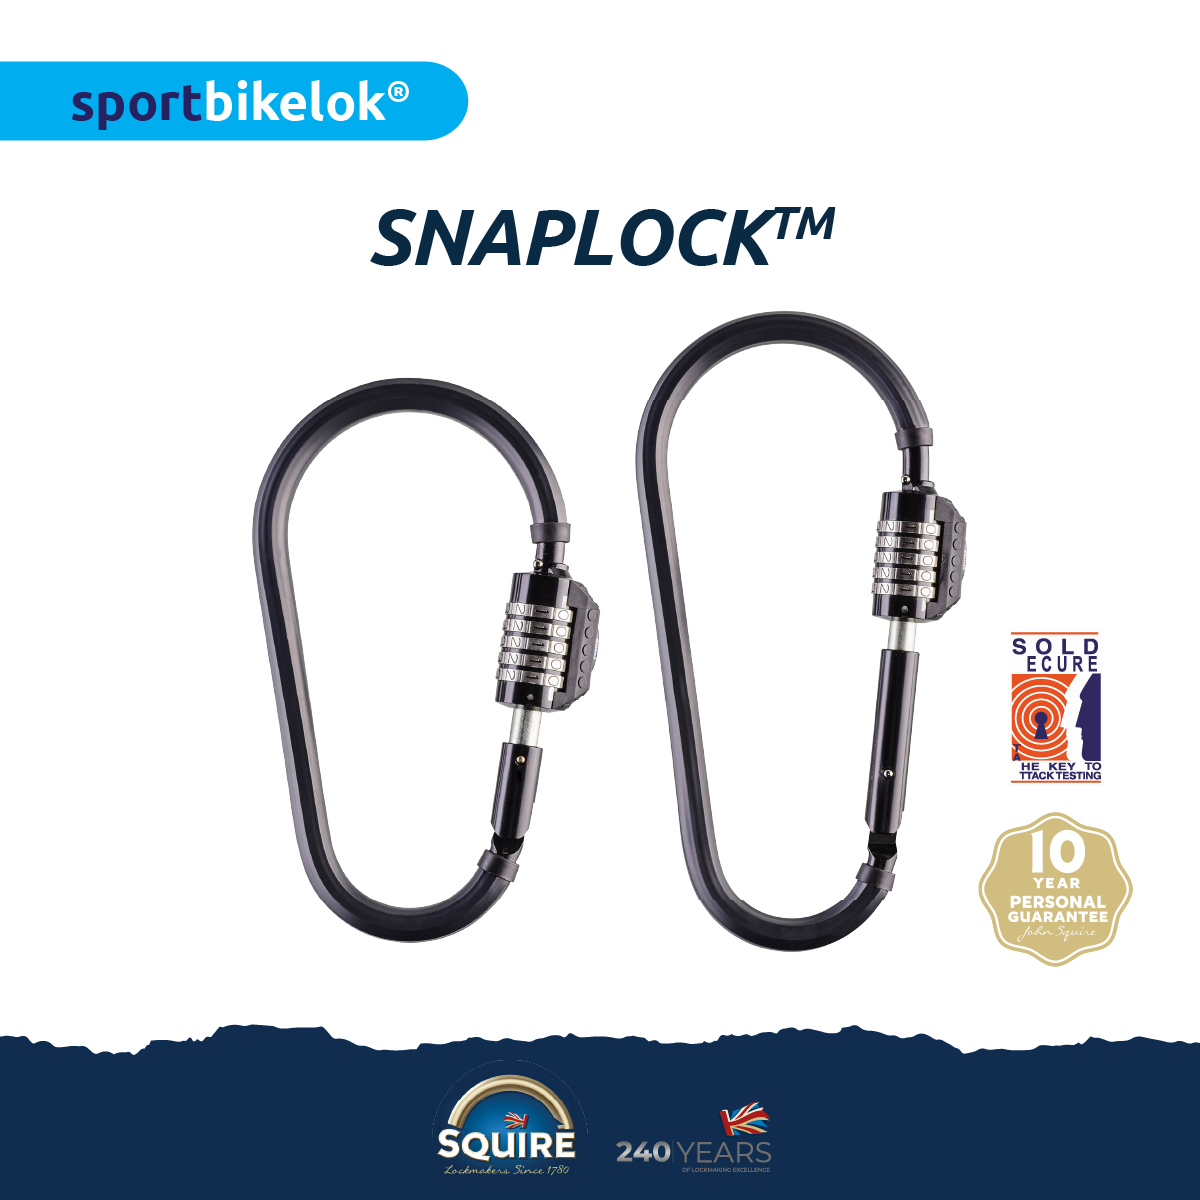 SNAPLOCK - Combination Bicycle Lock